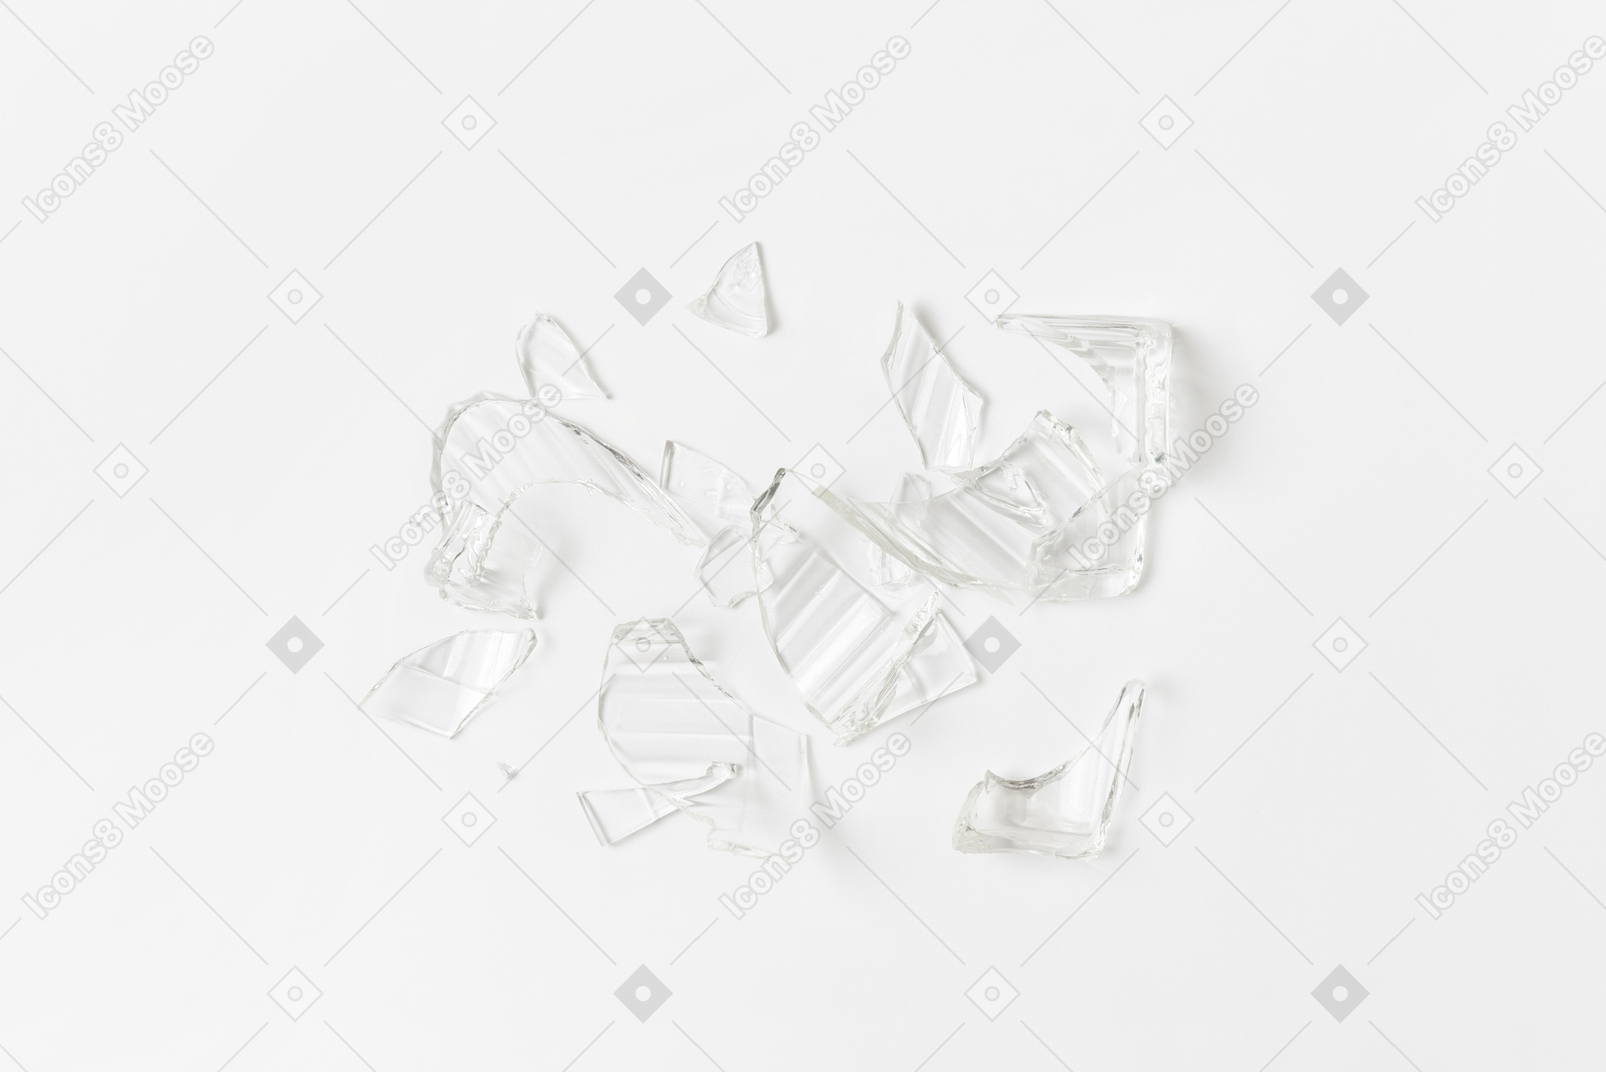 Broken glass pieces on white background